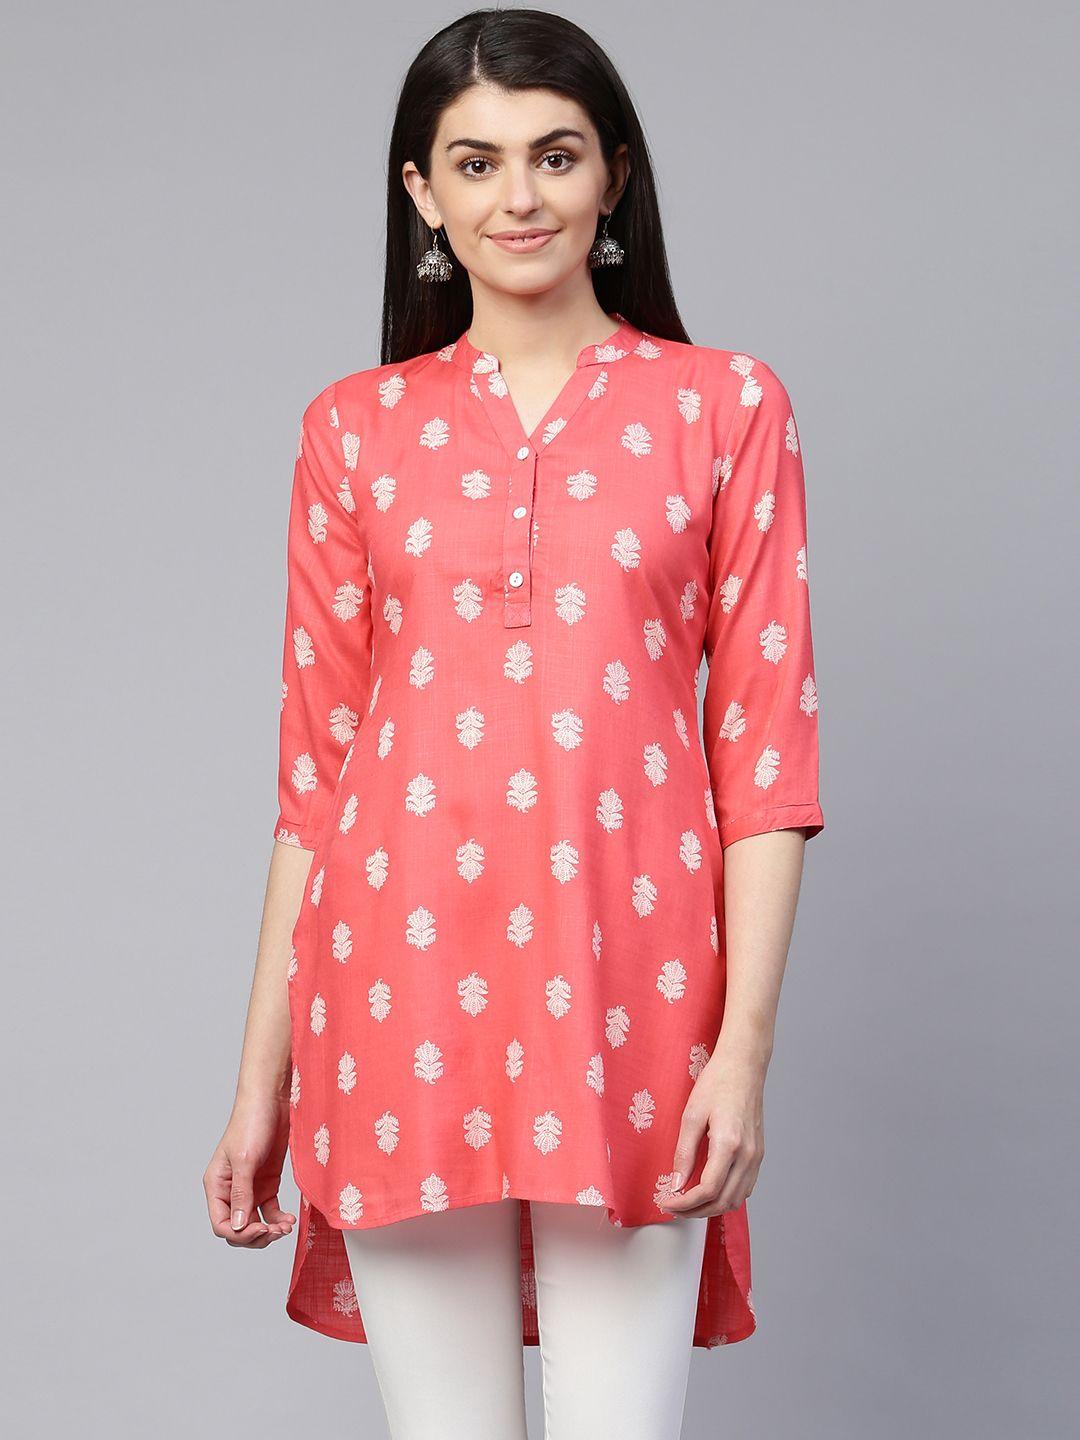 rangmayee women pink & off-white printed tunic